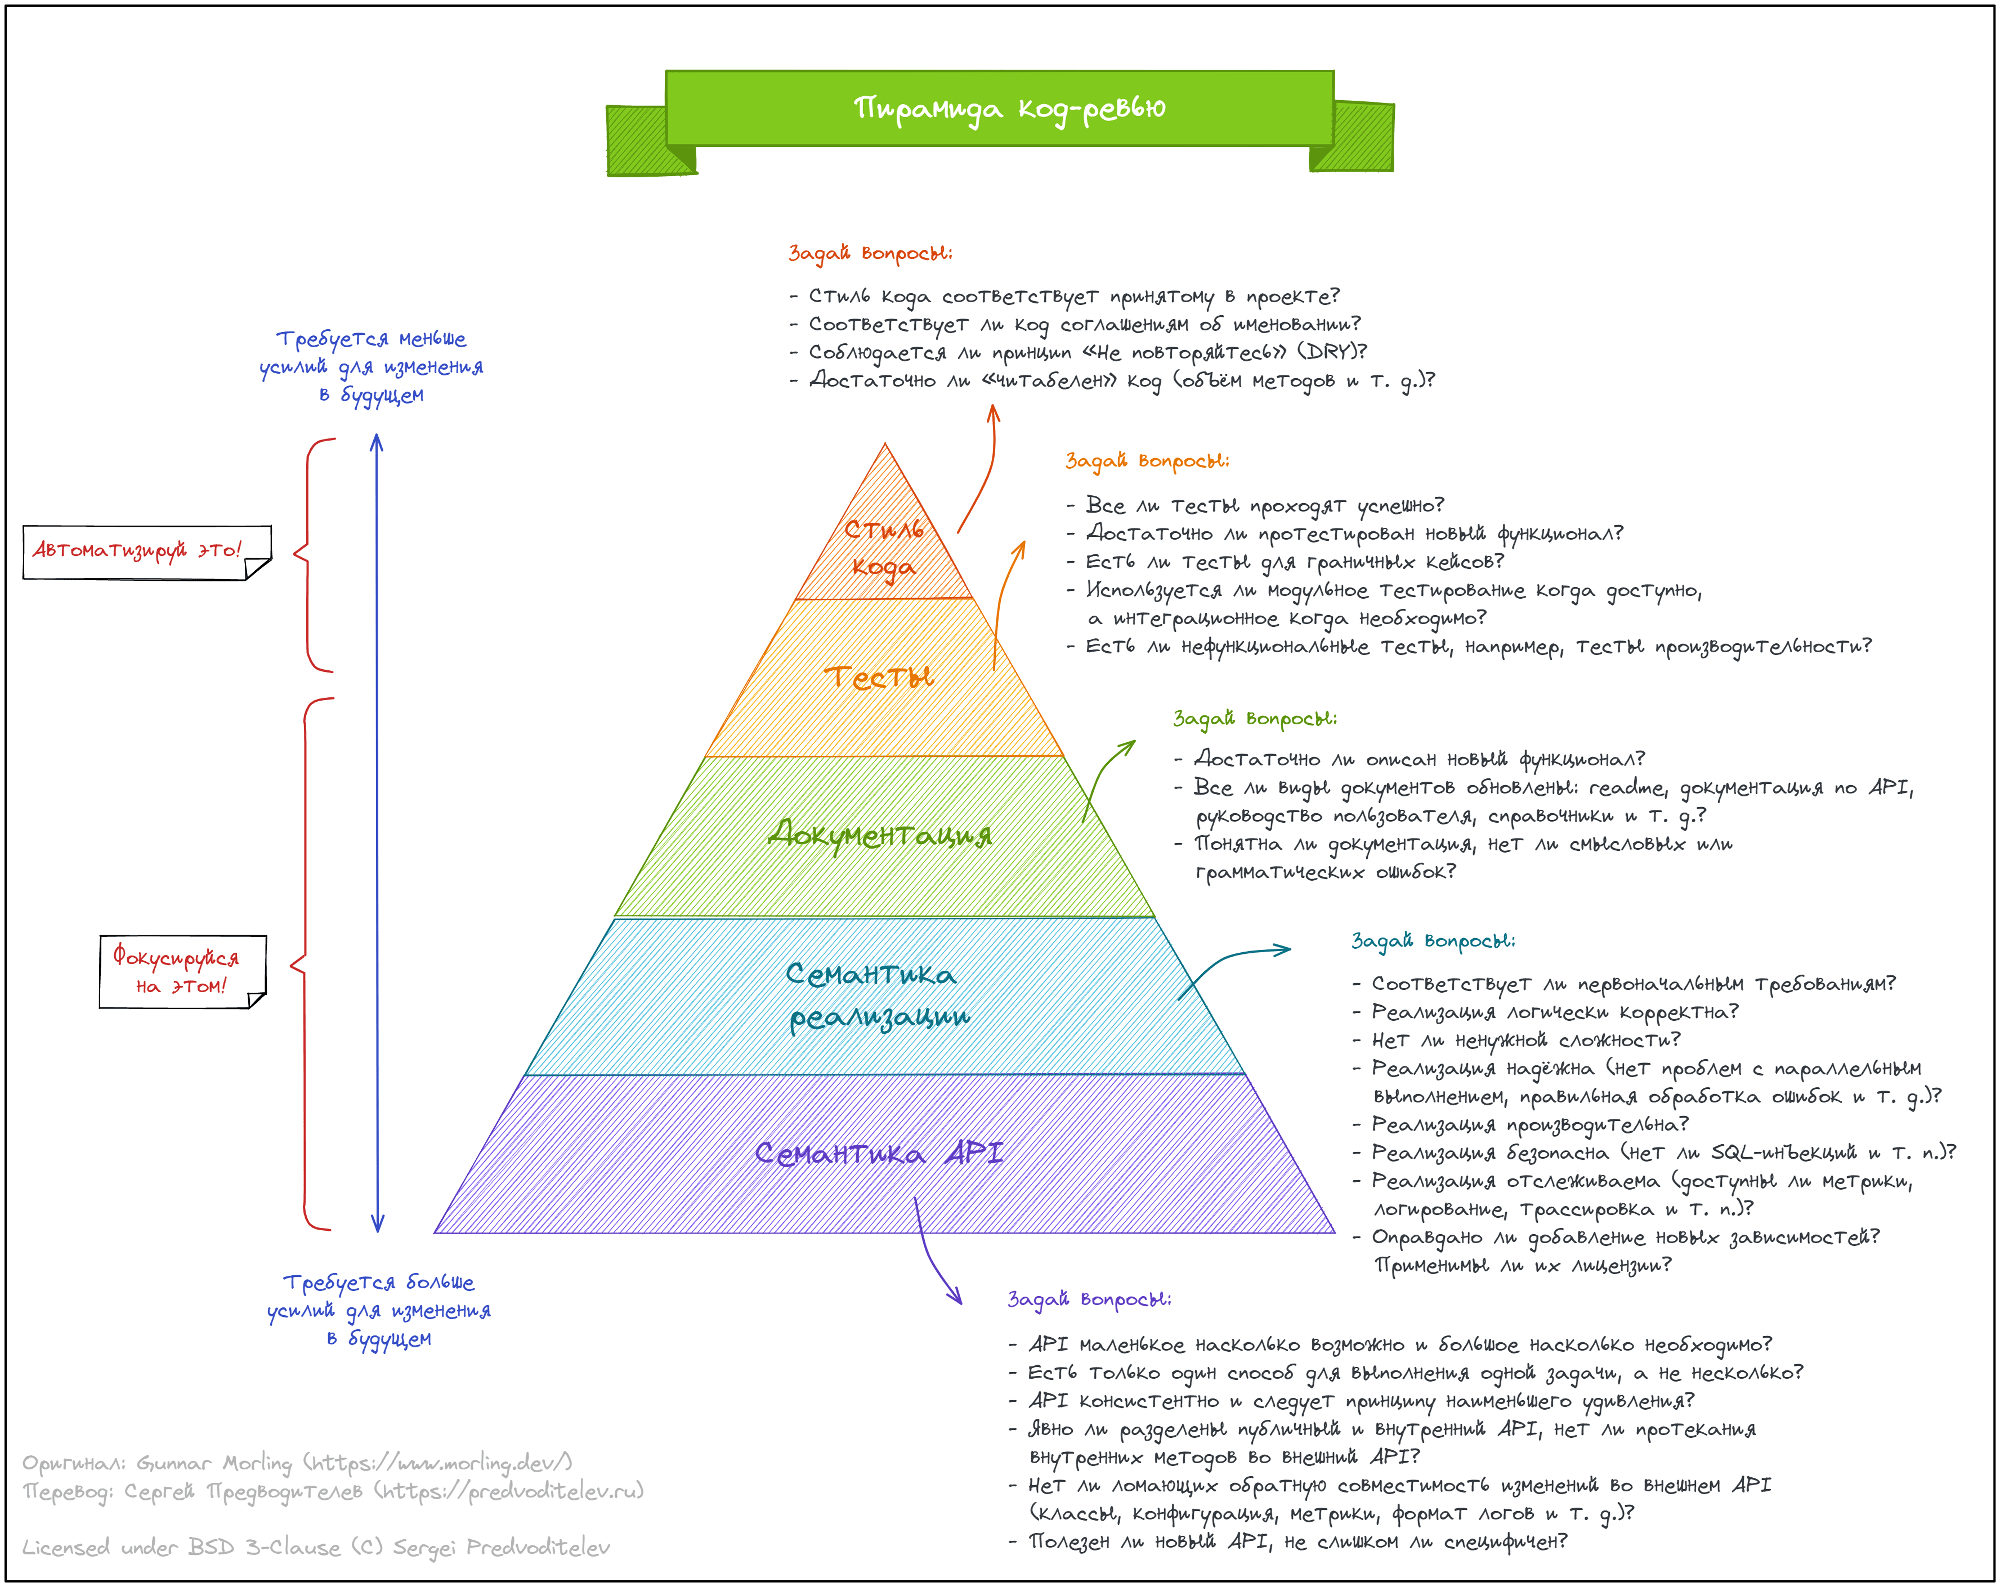 code-review-pyramid!